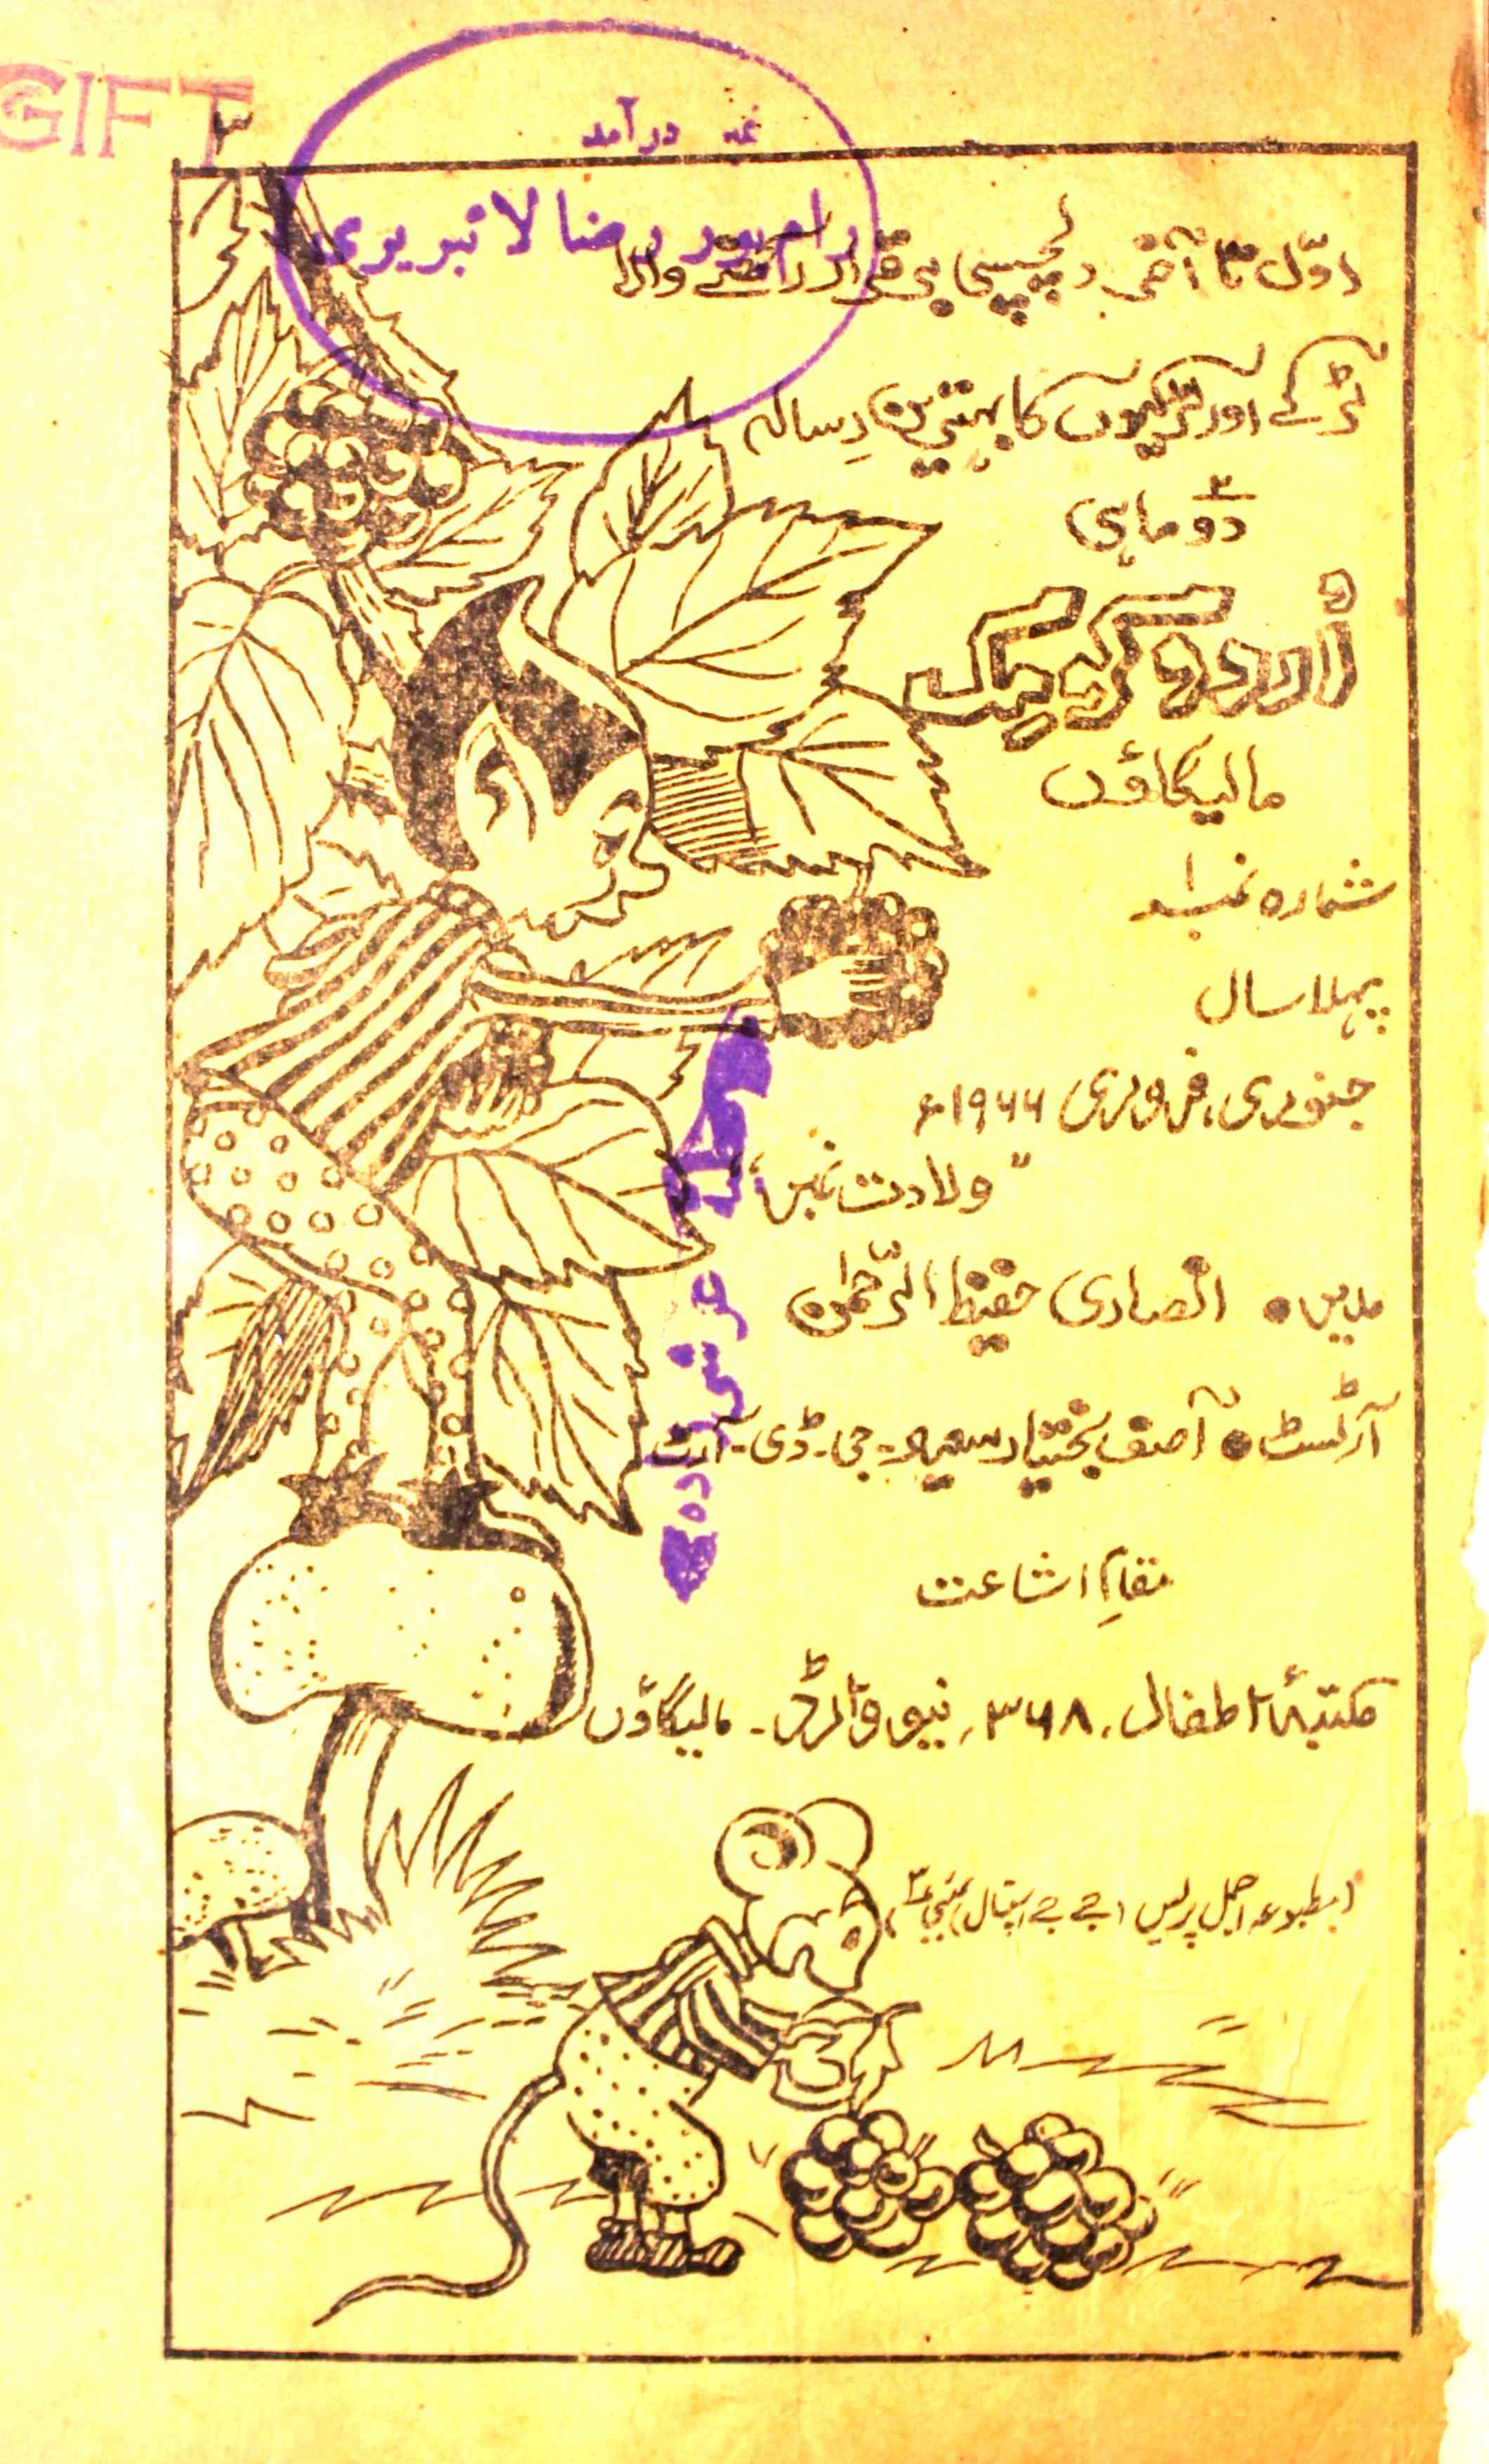 उर्दू कॉमिक- Magazine by मकतबा अतफ़ाल, मालेगांव 